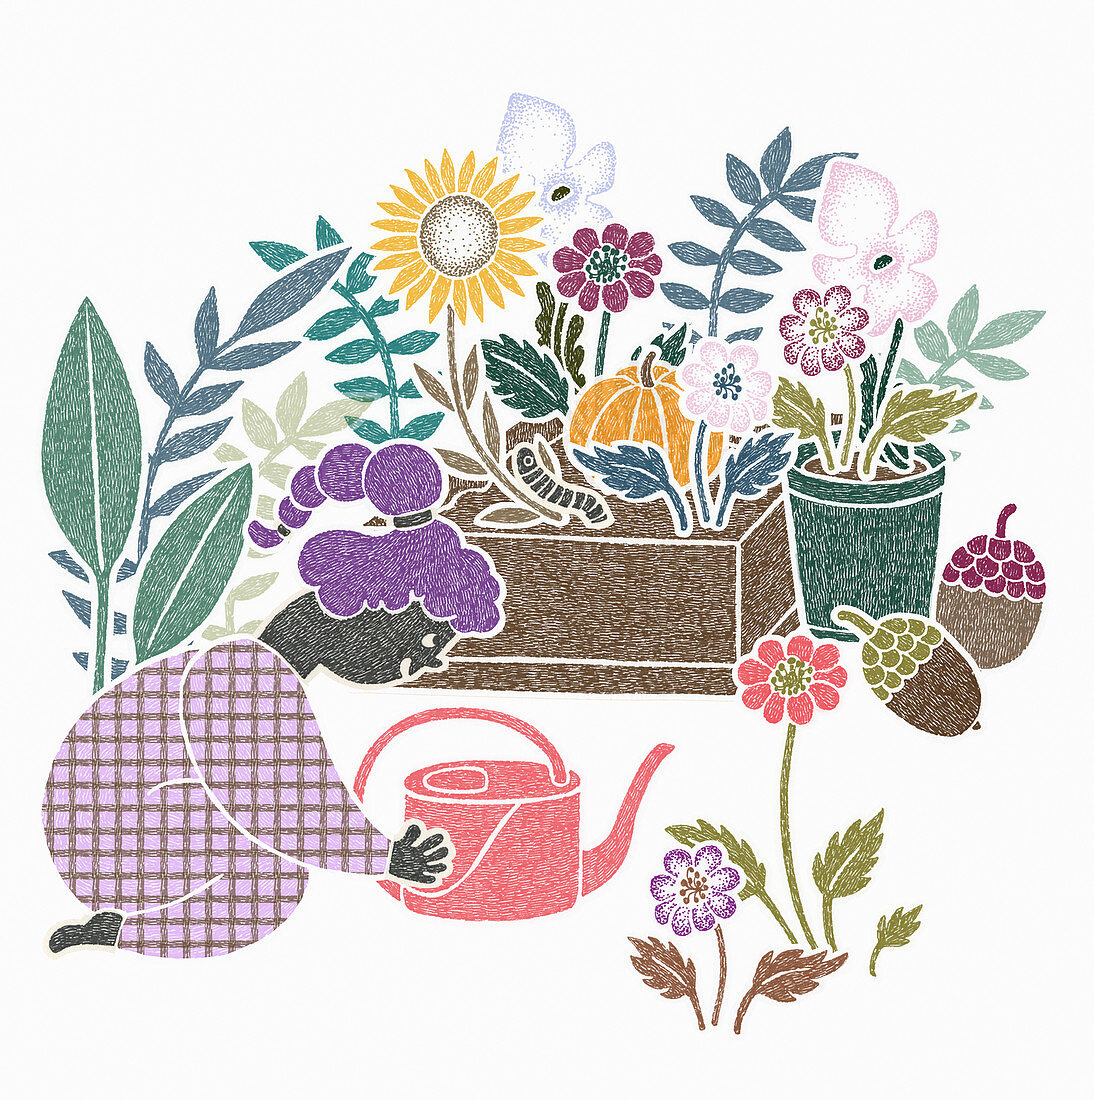 Woman gardening, illustration